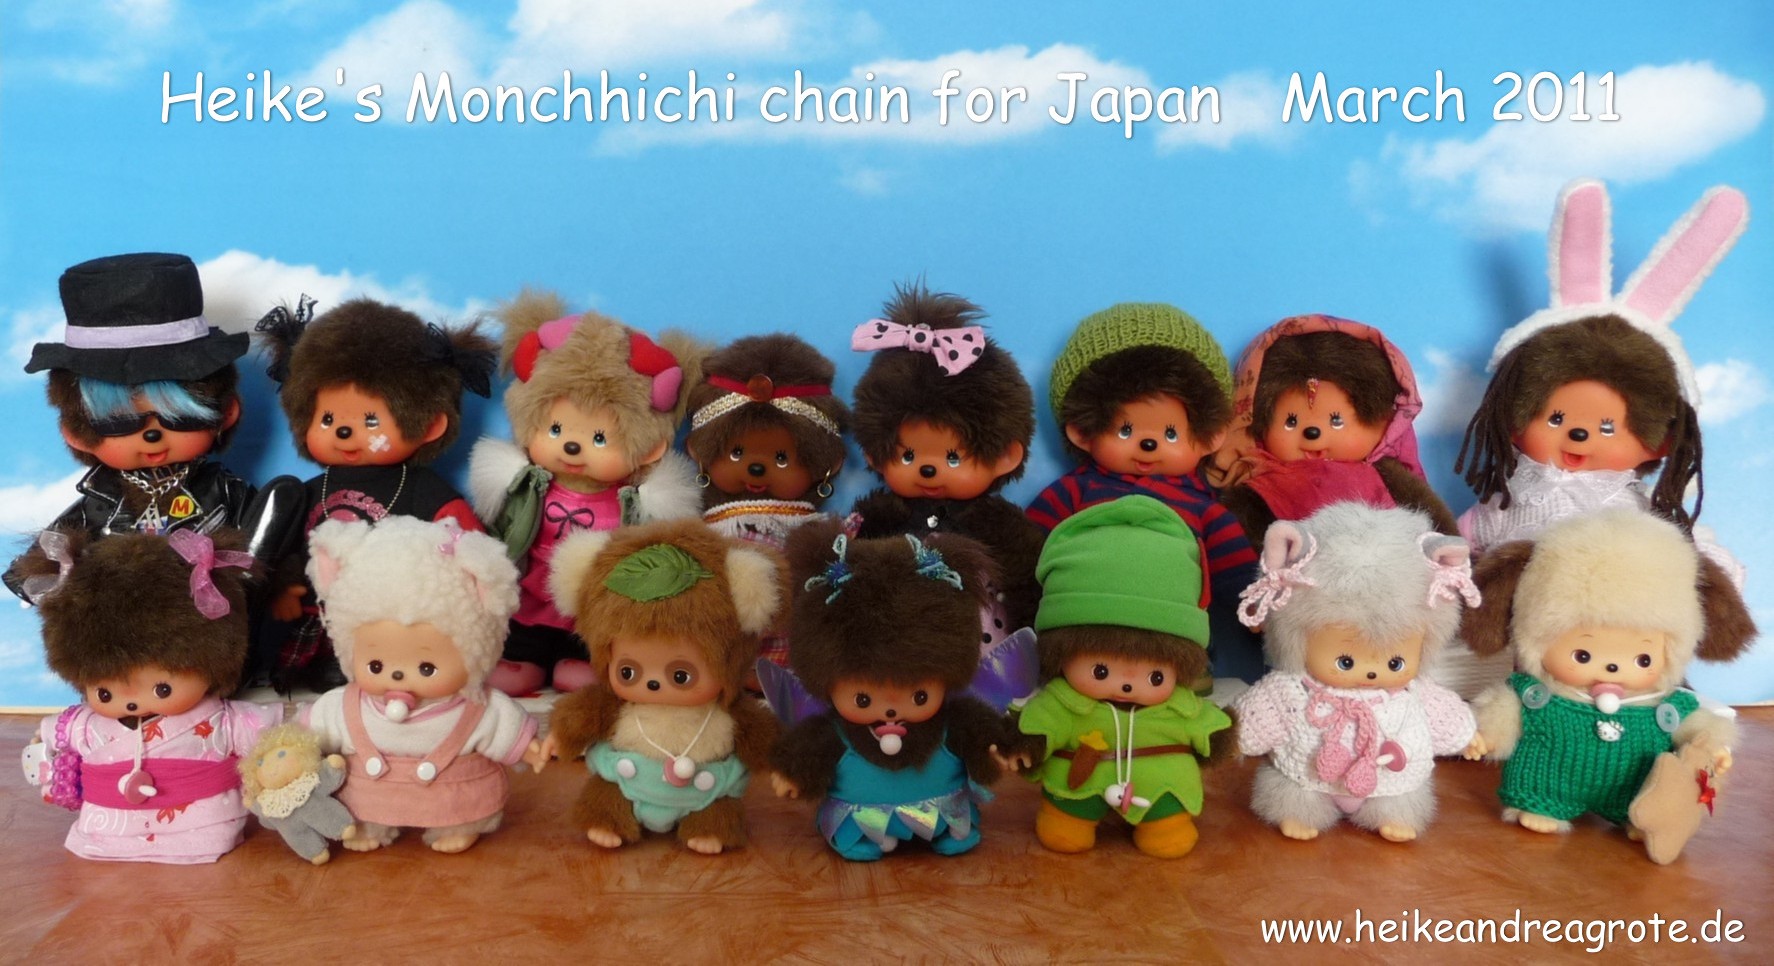 Heike's Monchhichi Chain For Japan